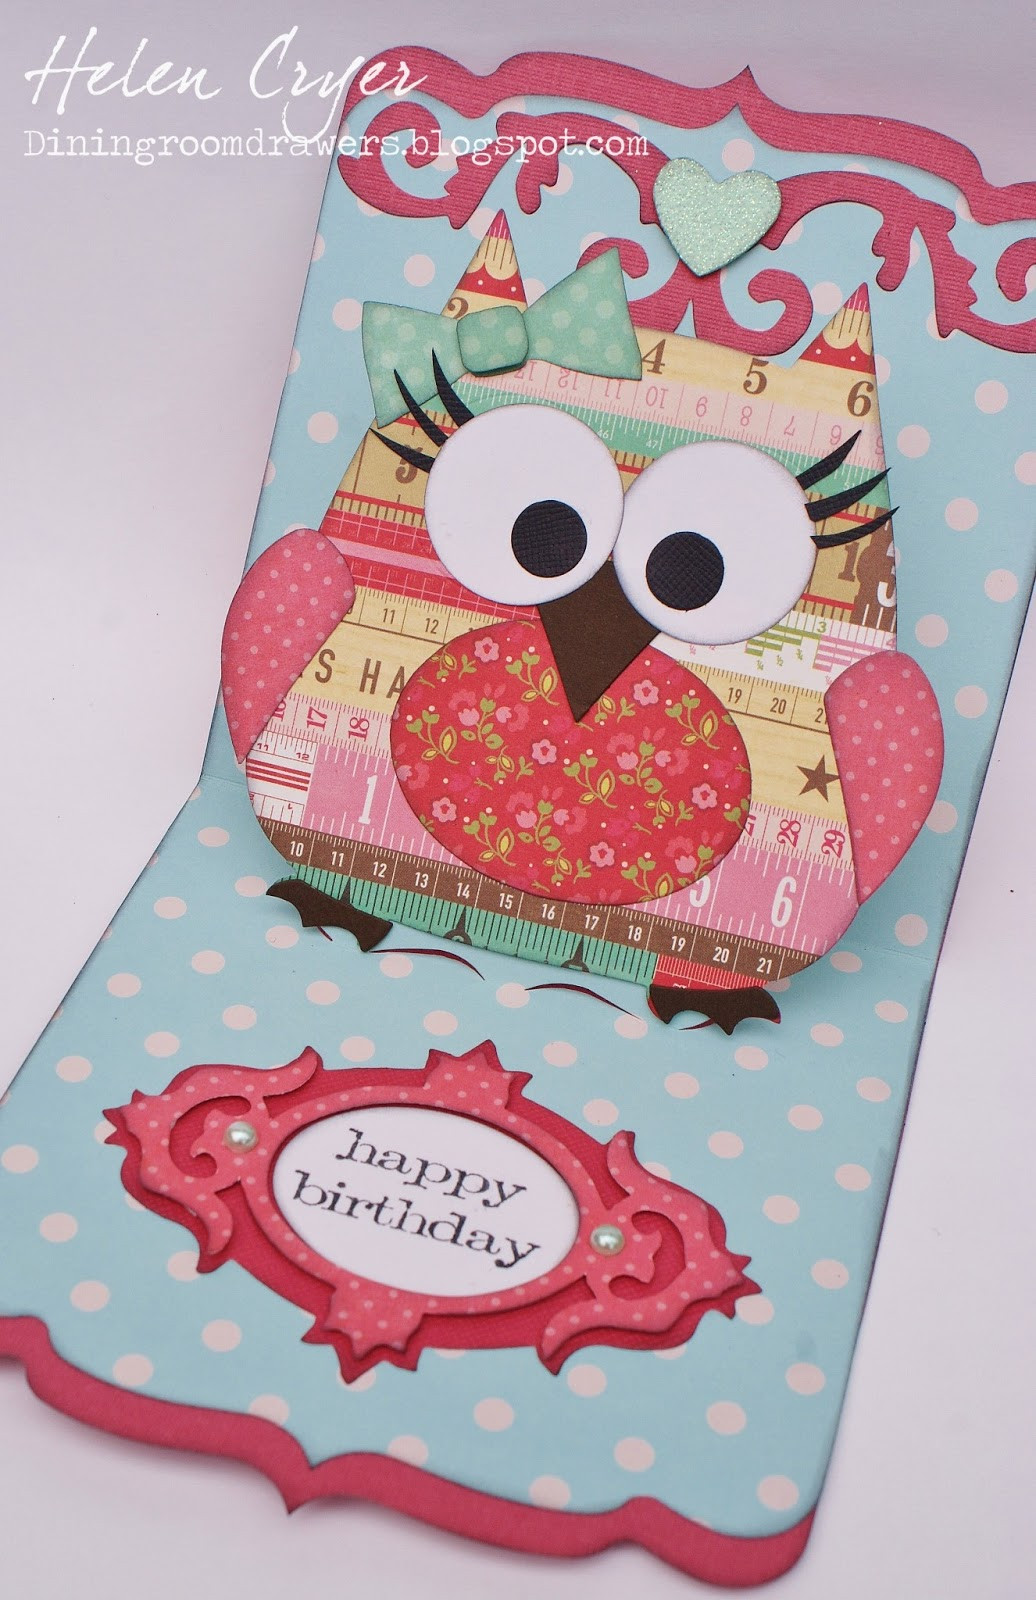 Owl Birthday Card
 The Dining Room Drawers Sizzix Pop n Cuts Girl Owl